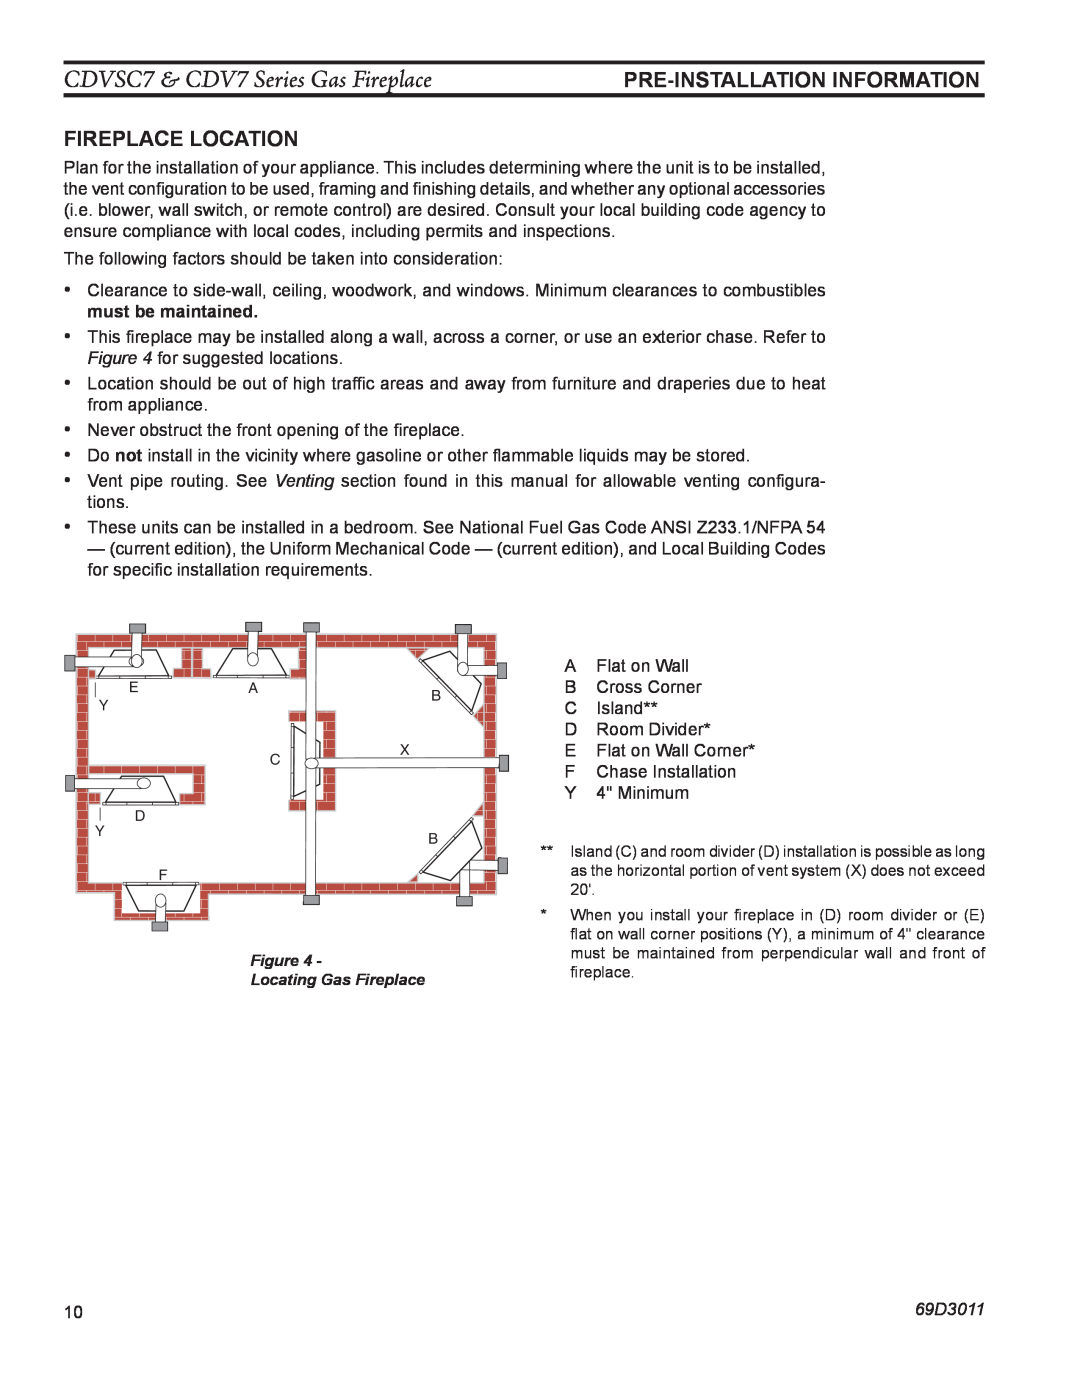 Monessen Hearth manual Fireplace Location, CDVSC7 & CDV7 Series Gas Fireplace, pRE-INSTALLATIONINFORMATION, 69D3011 